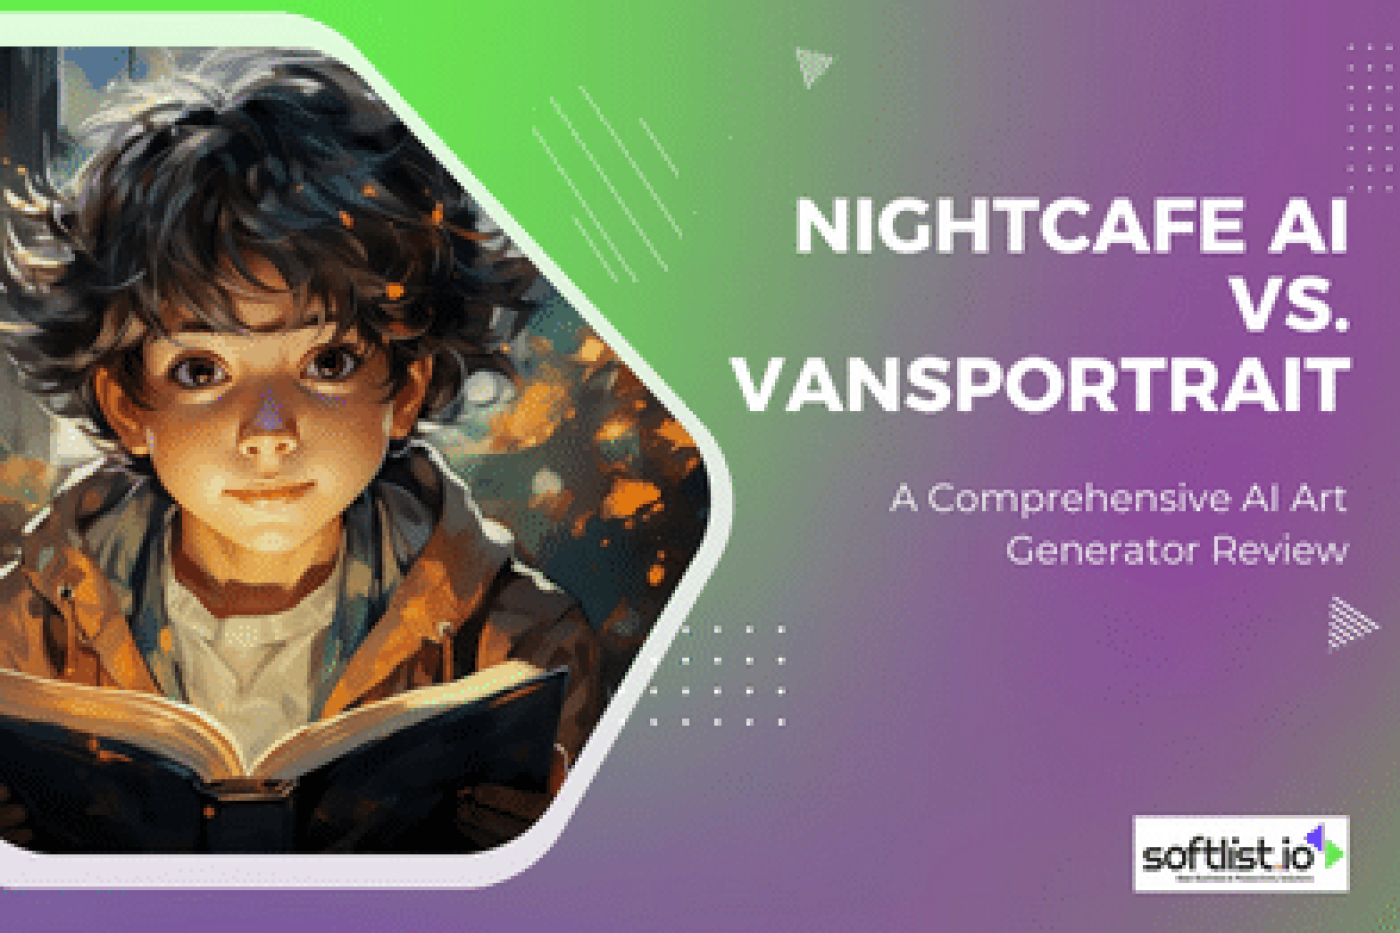 Nightcafe AI vs. VansPortrait: A Comprehensive AI Art Generator Review